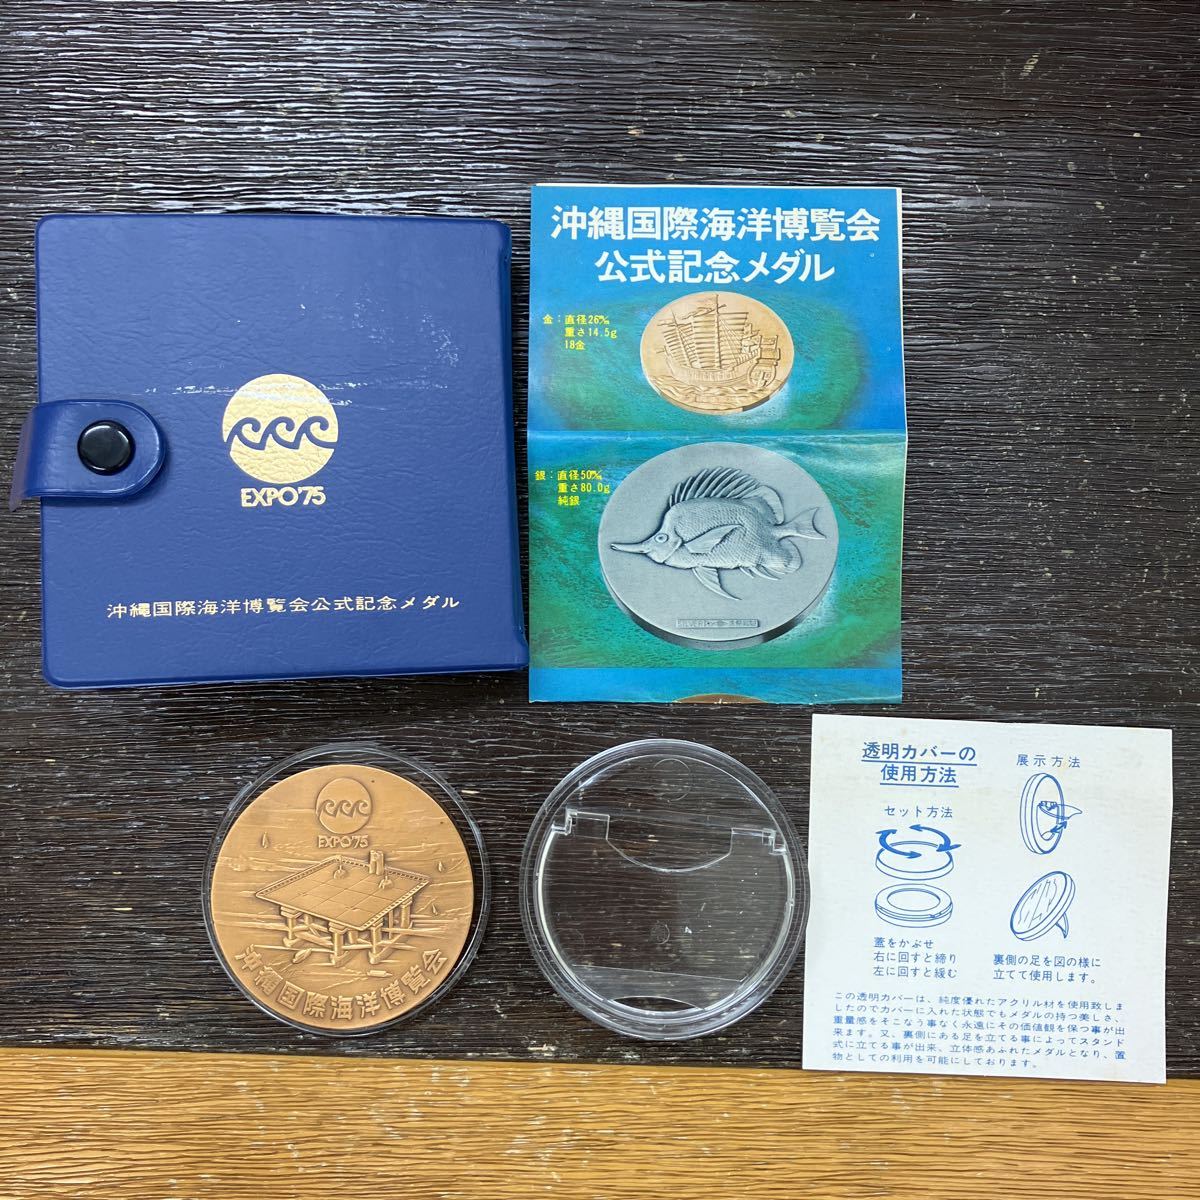 EXPO'75 沖縄国際海洋博覧会 公式記念メダル 銅メダル_画像3